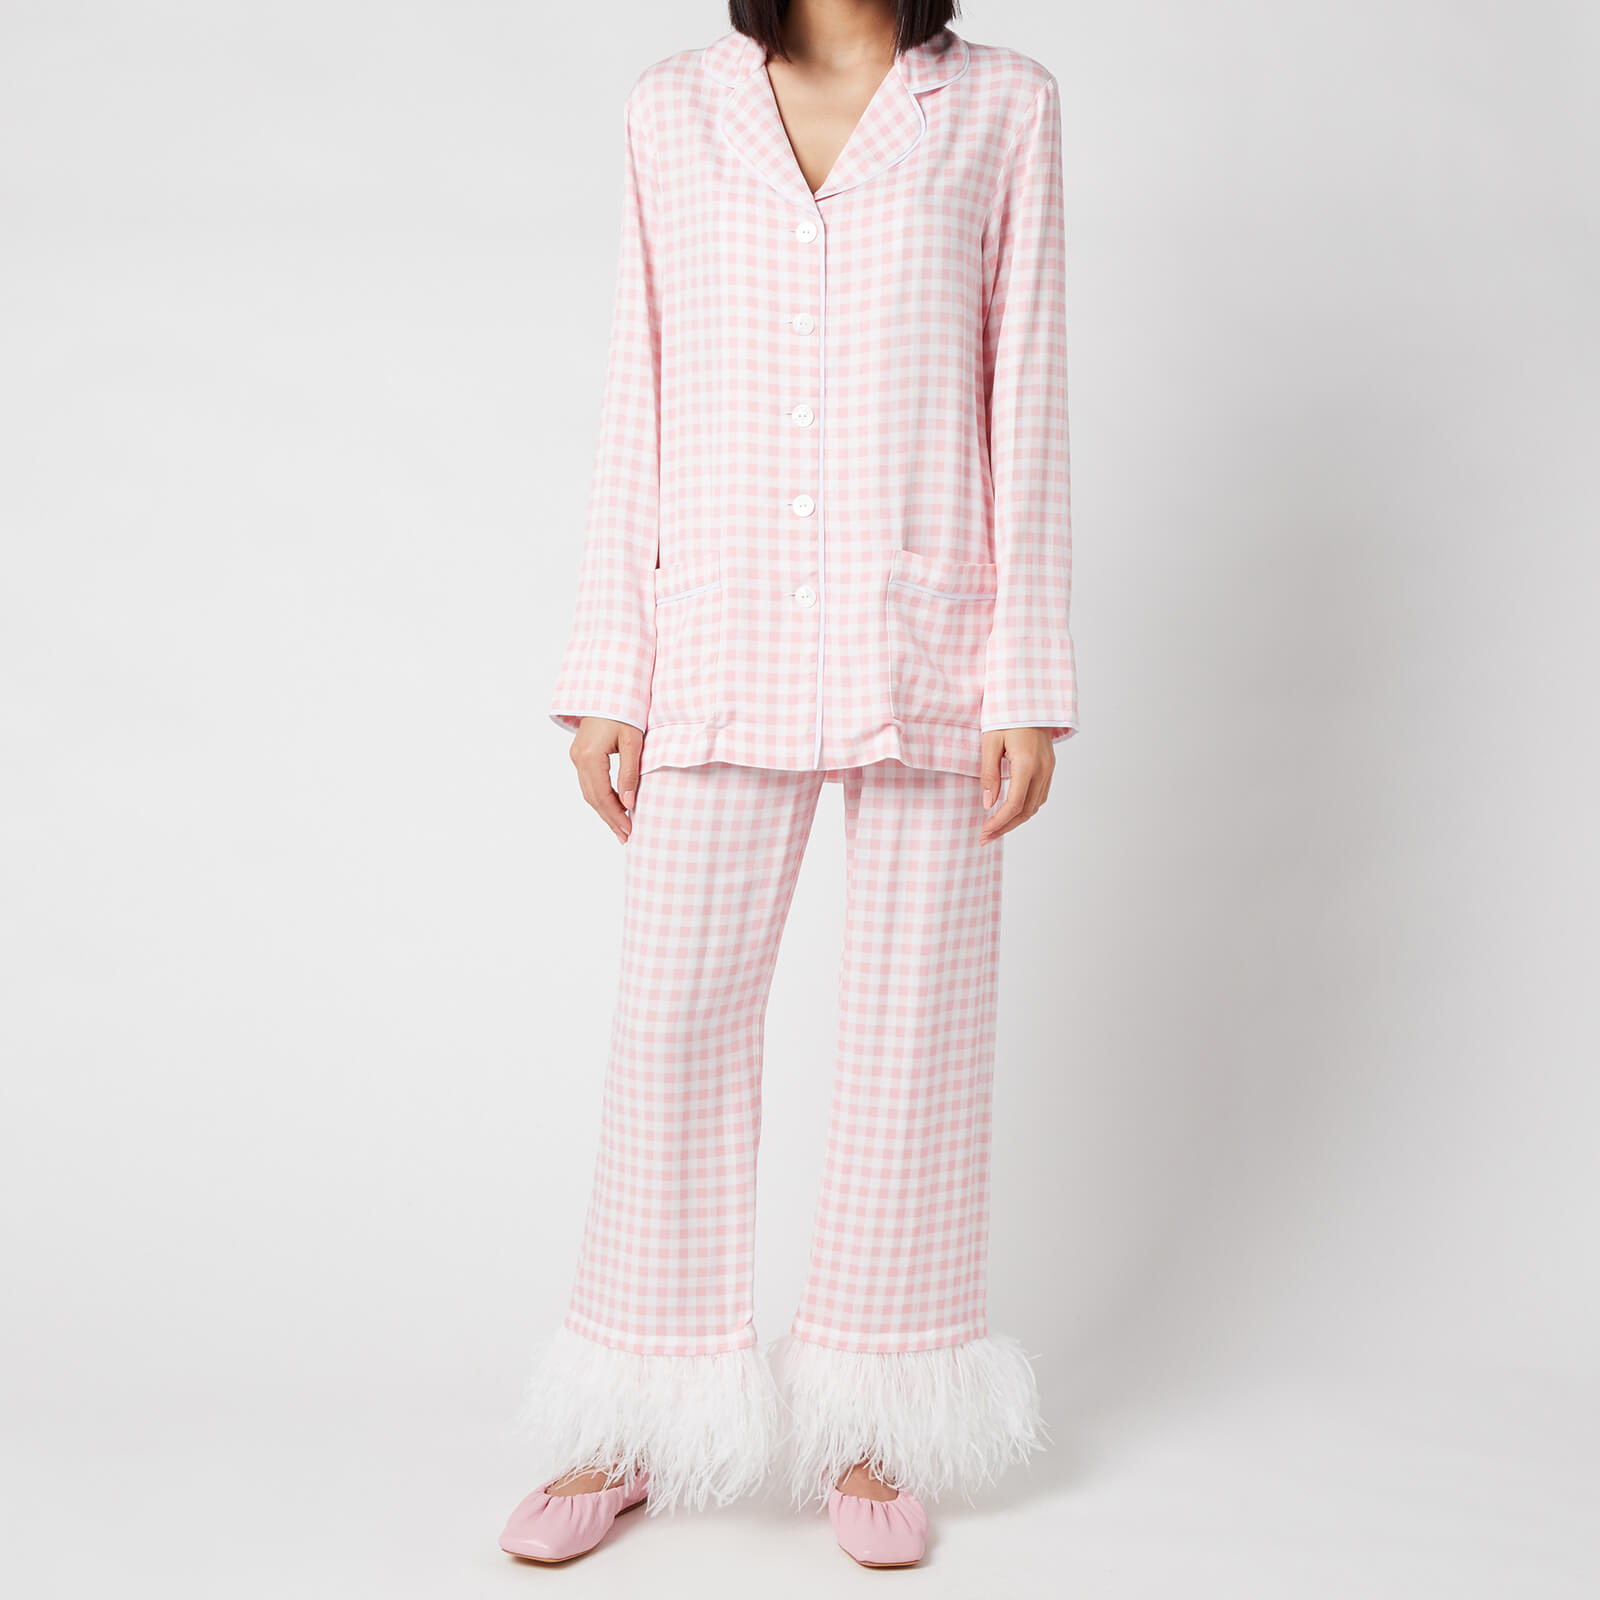 Sleeper Women's Party Pyjama Set with Feathers - Pink - XS